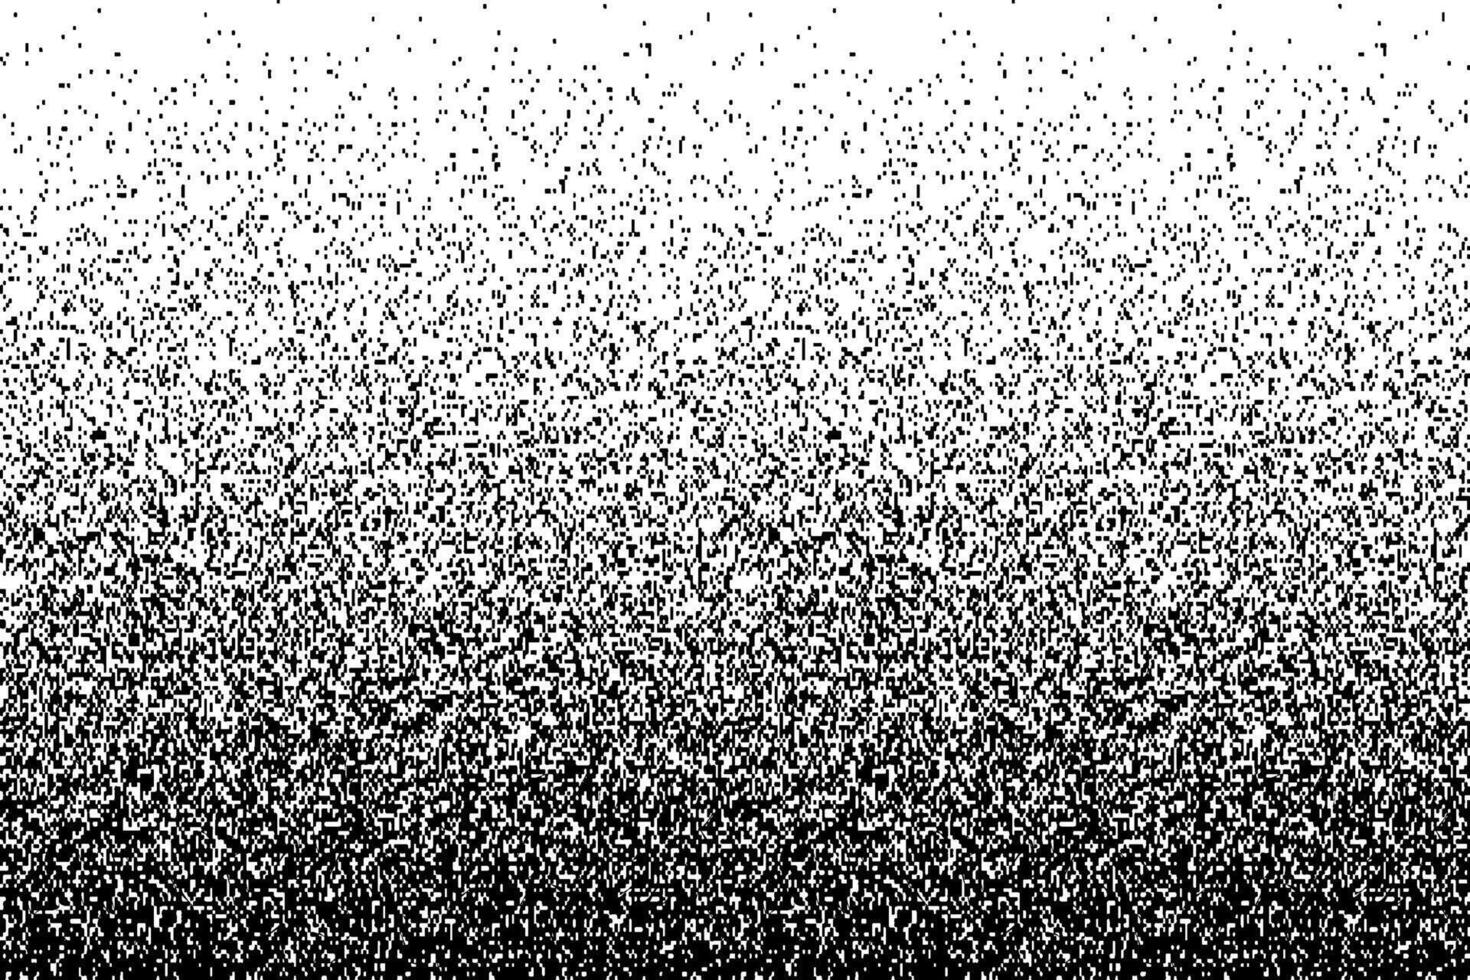 Gritty texture. Monochrome noise halftone texture. Vector illustration.